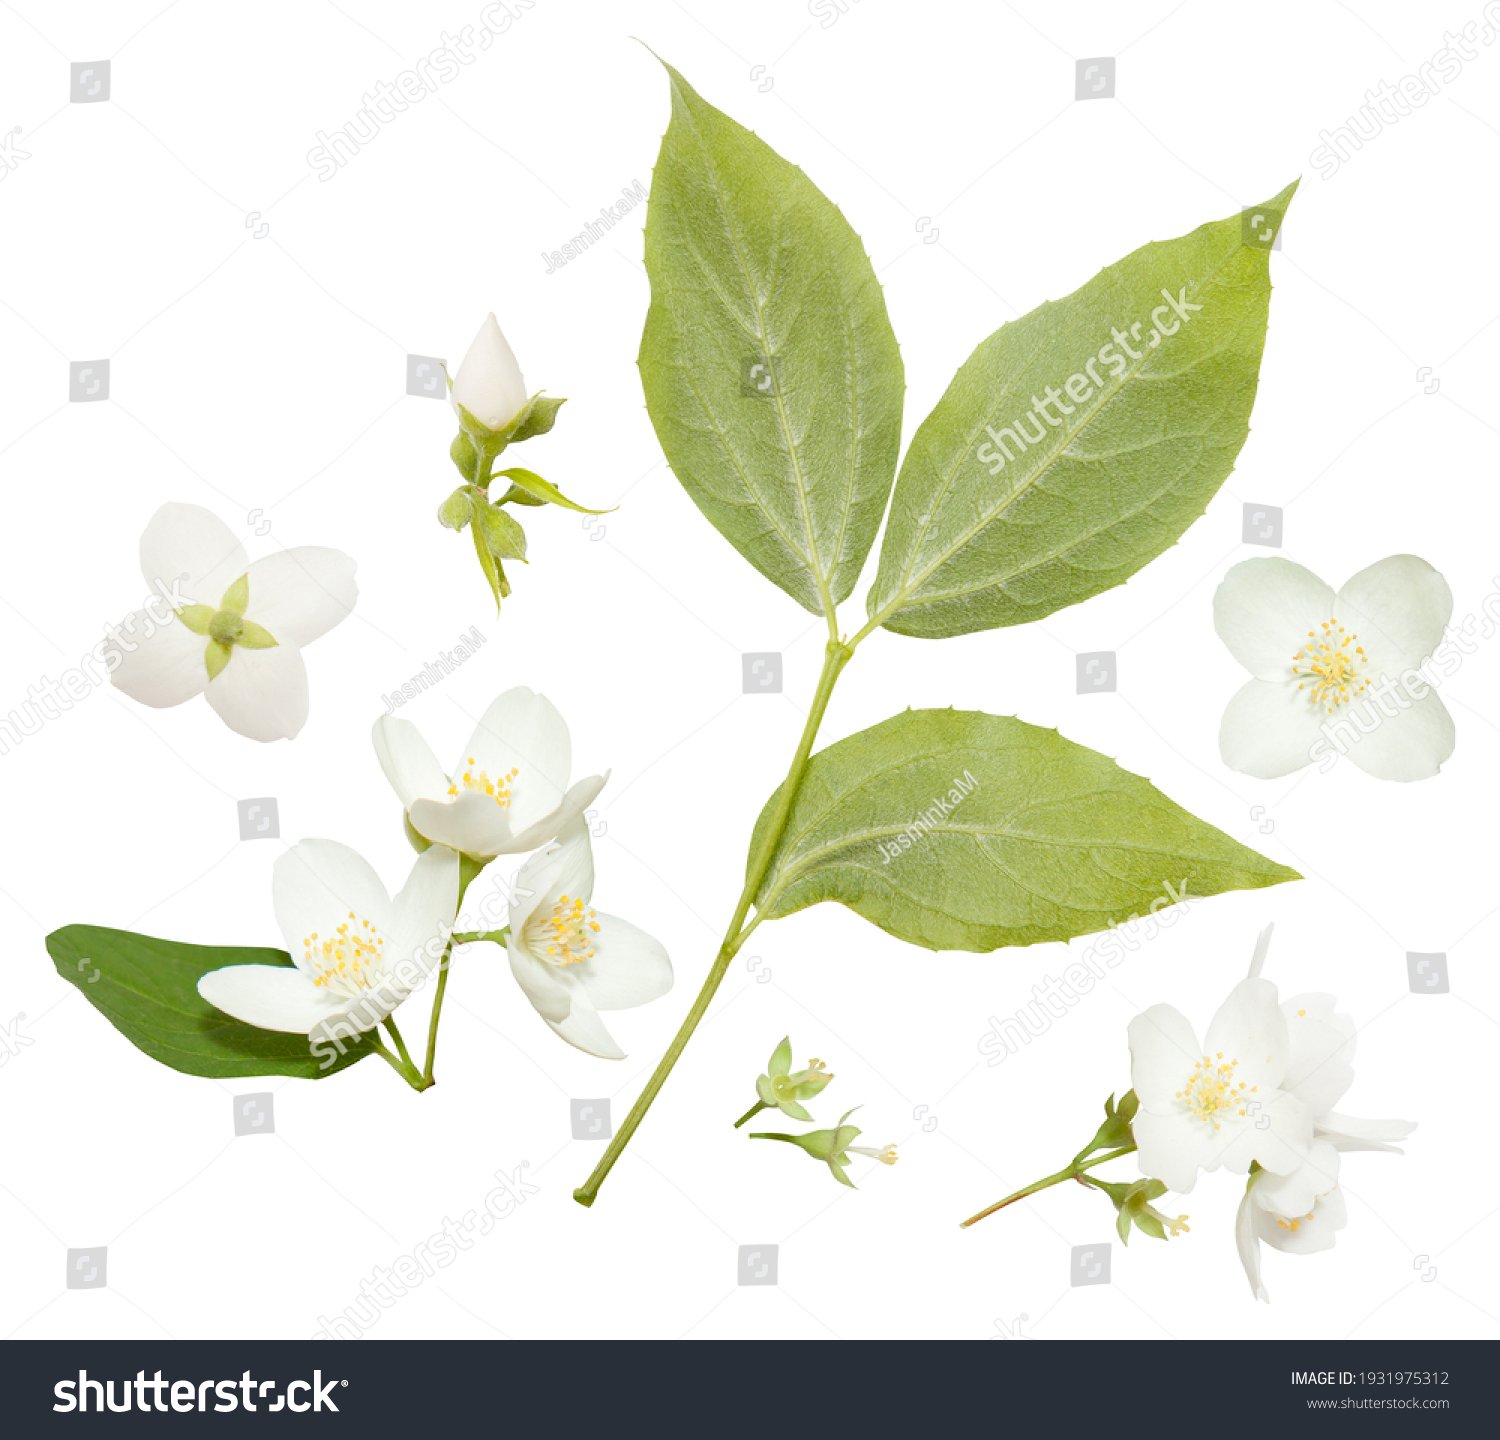 Fresh Jasmine flowers isolated on white. Jasmine blossom on white vackground #1931975312